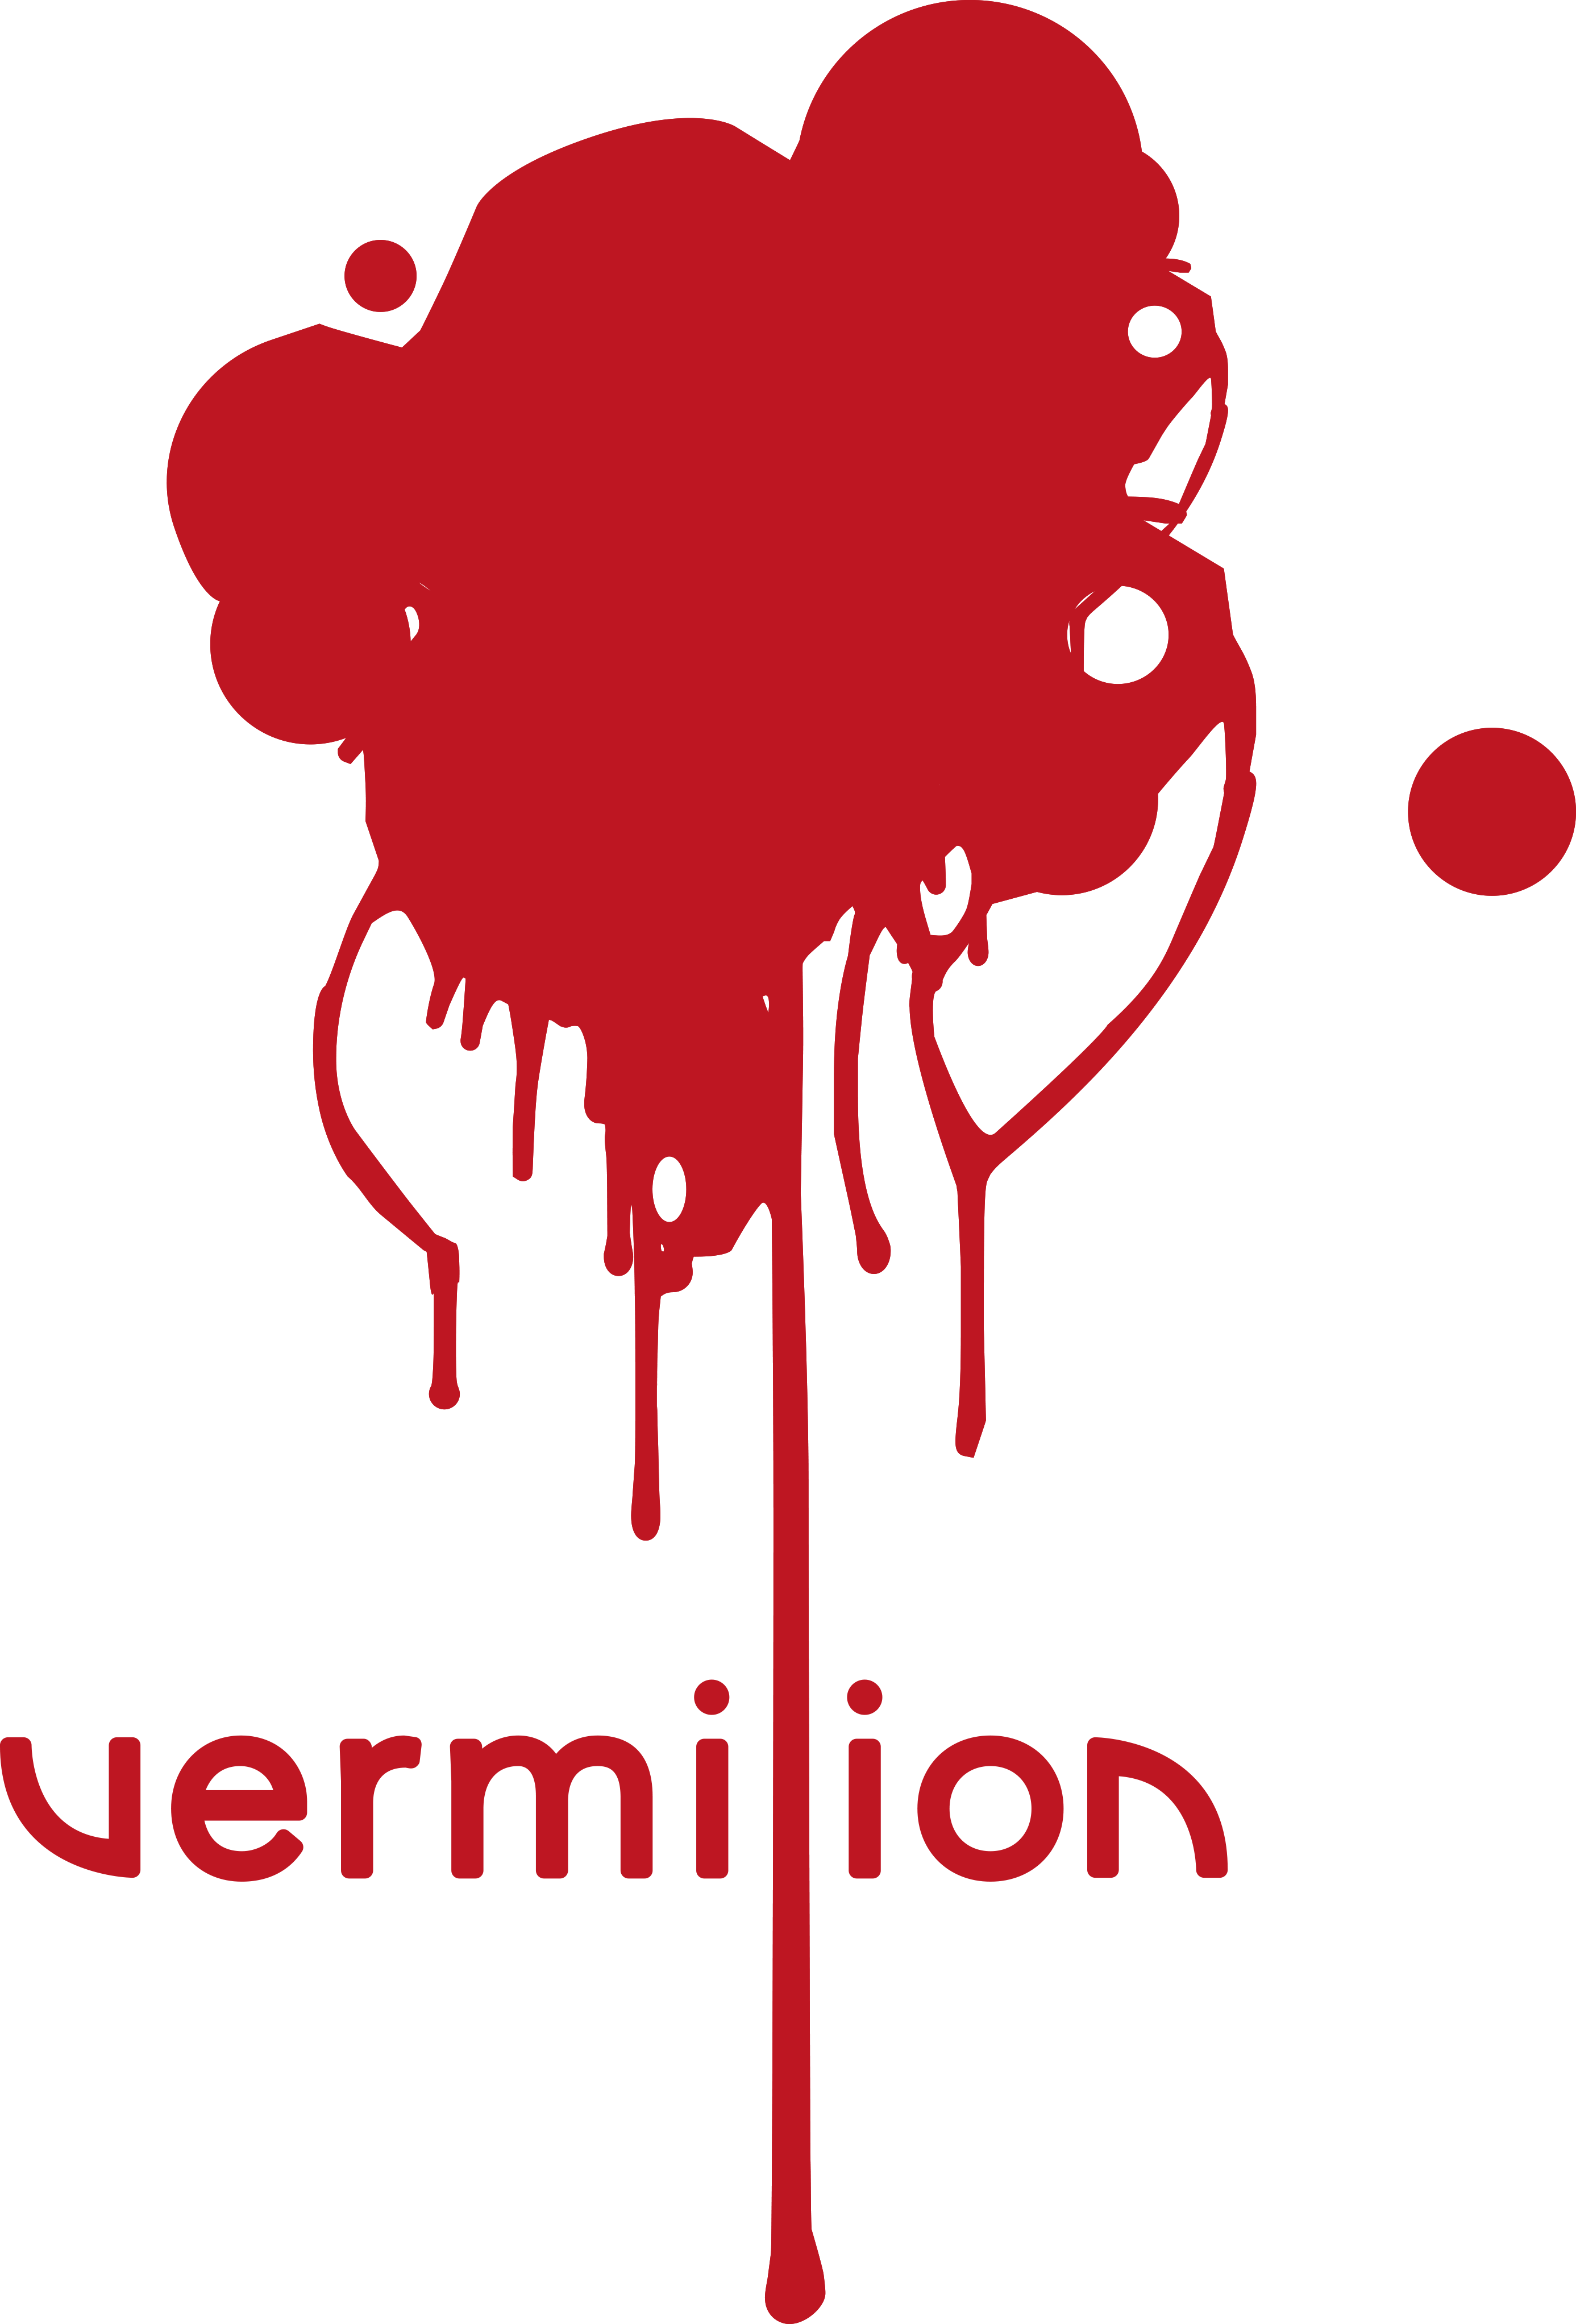 Vermilion Banquet Hall logo